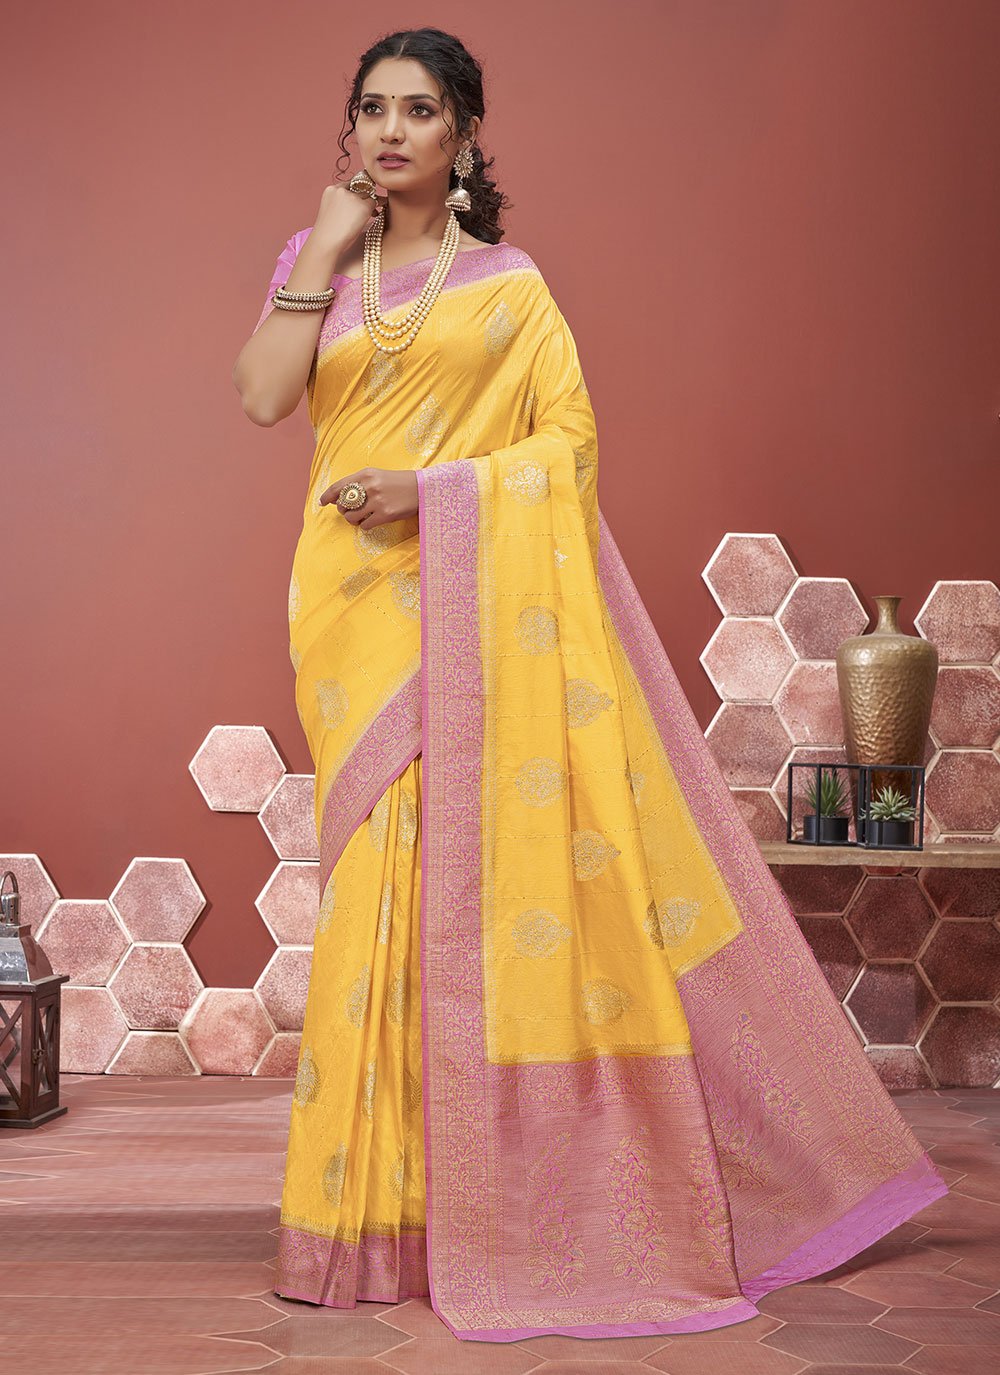 Yellow Art Silk Traditional Designer Saree